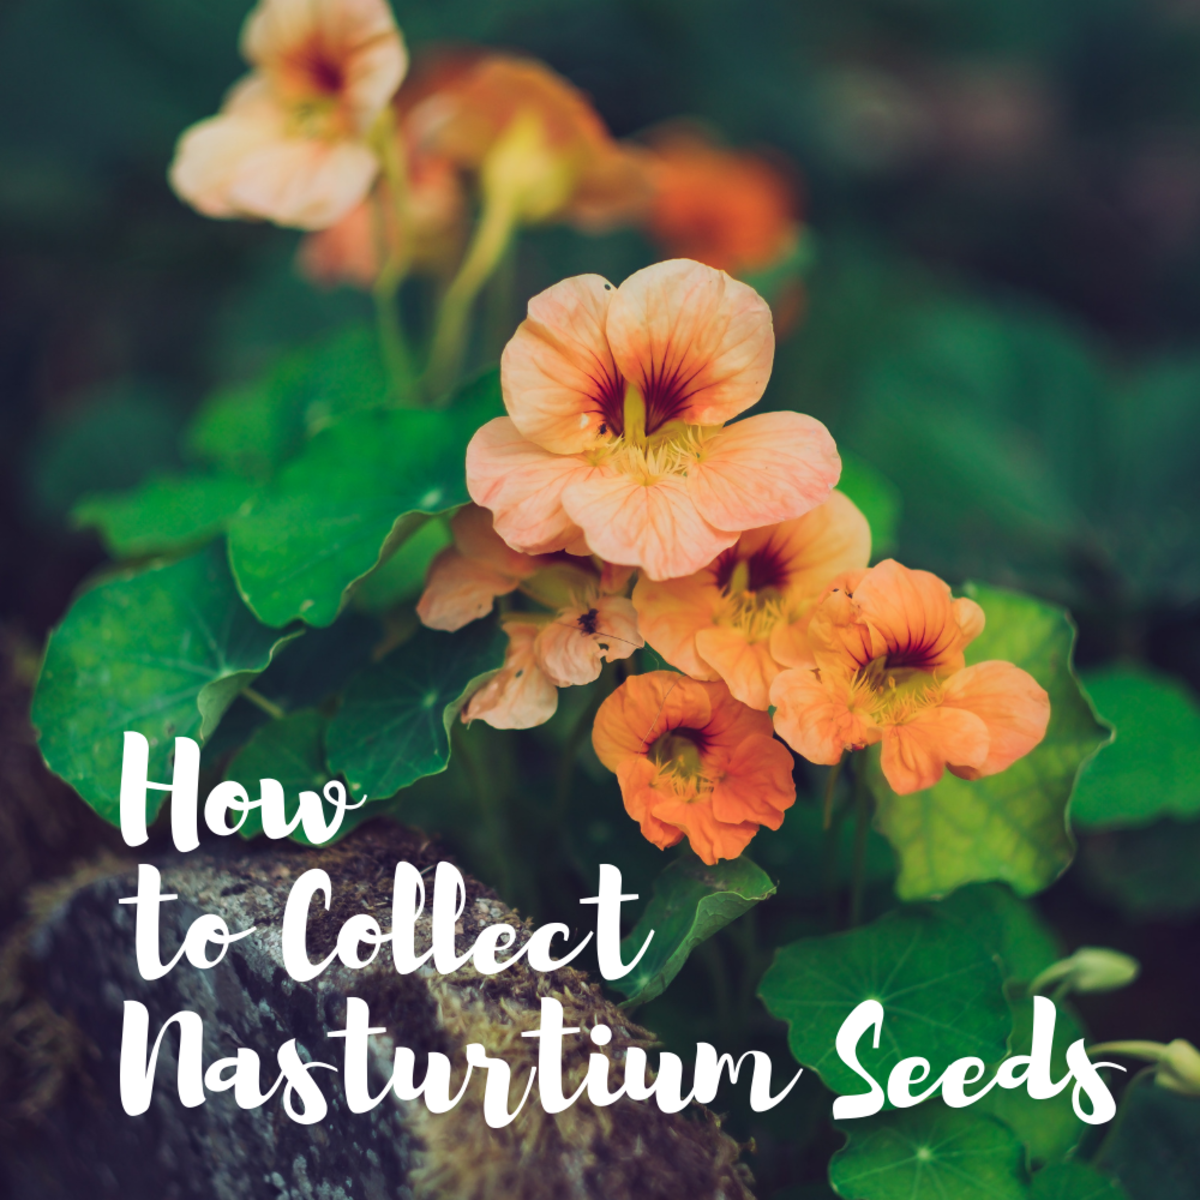 How to Collect Nasturtium Seeds